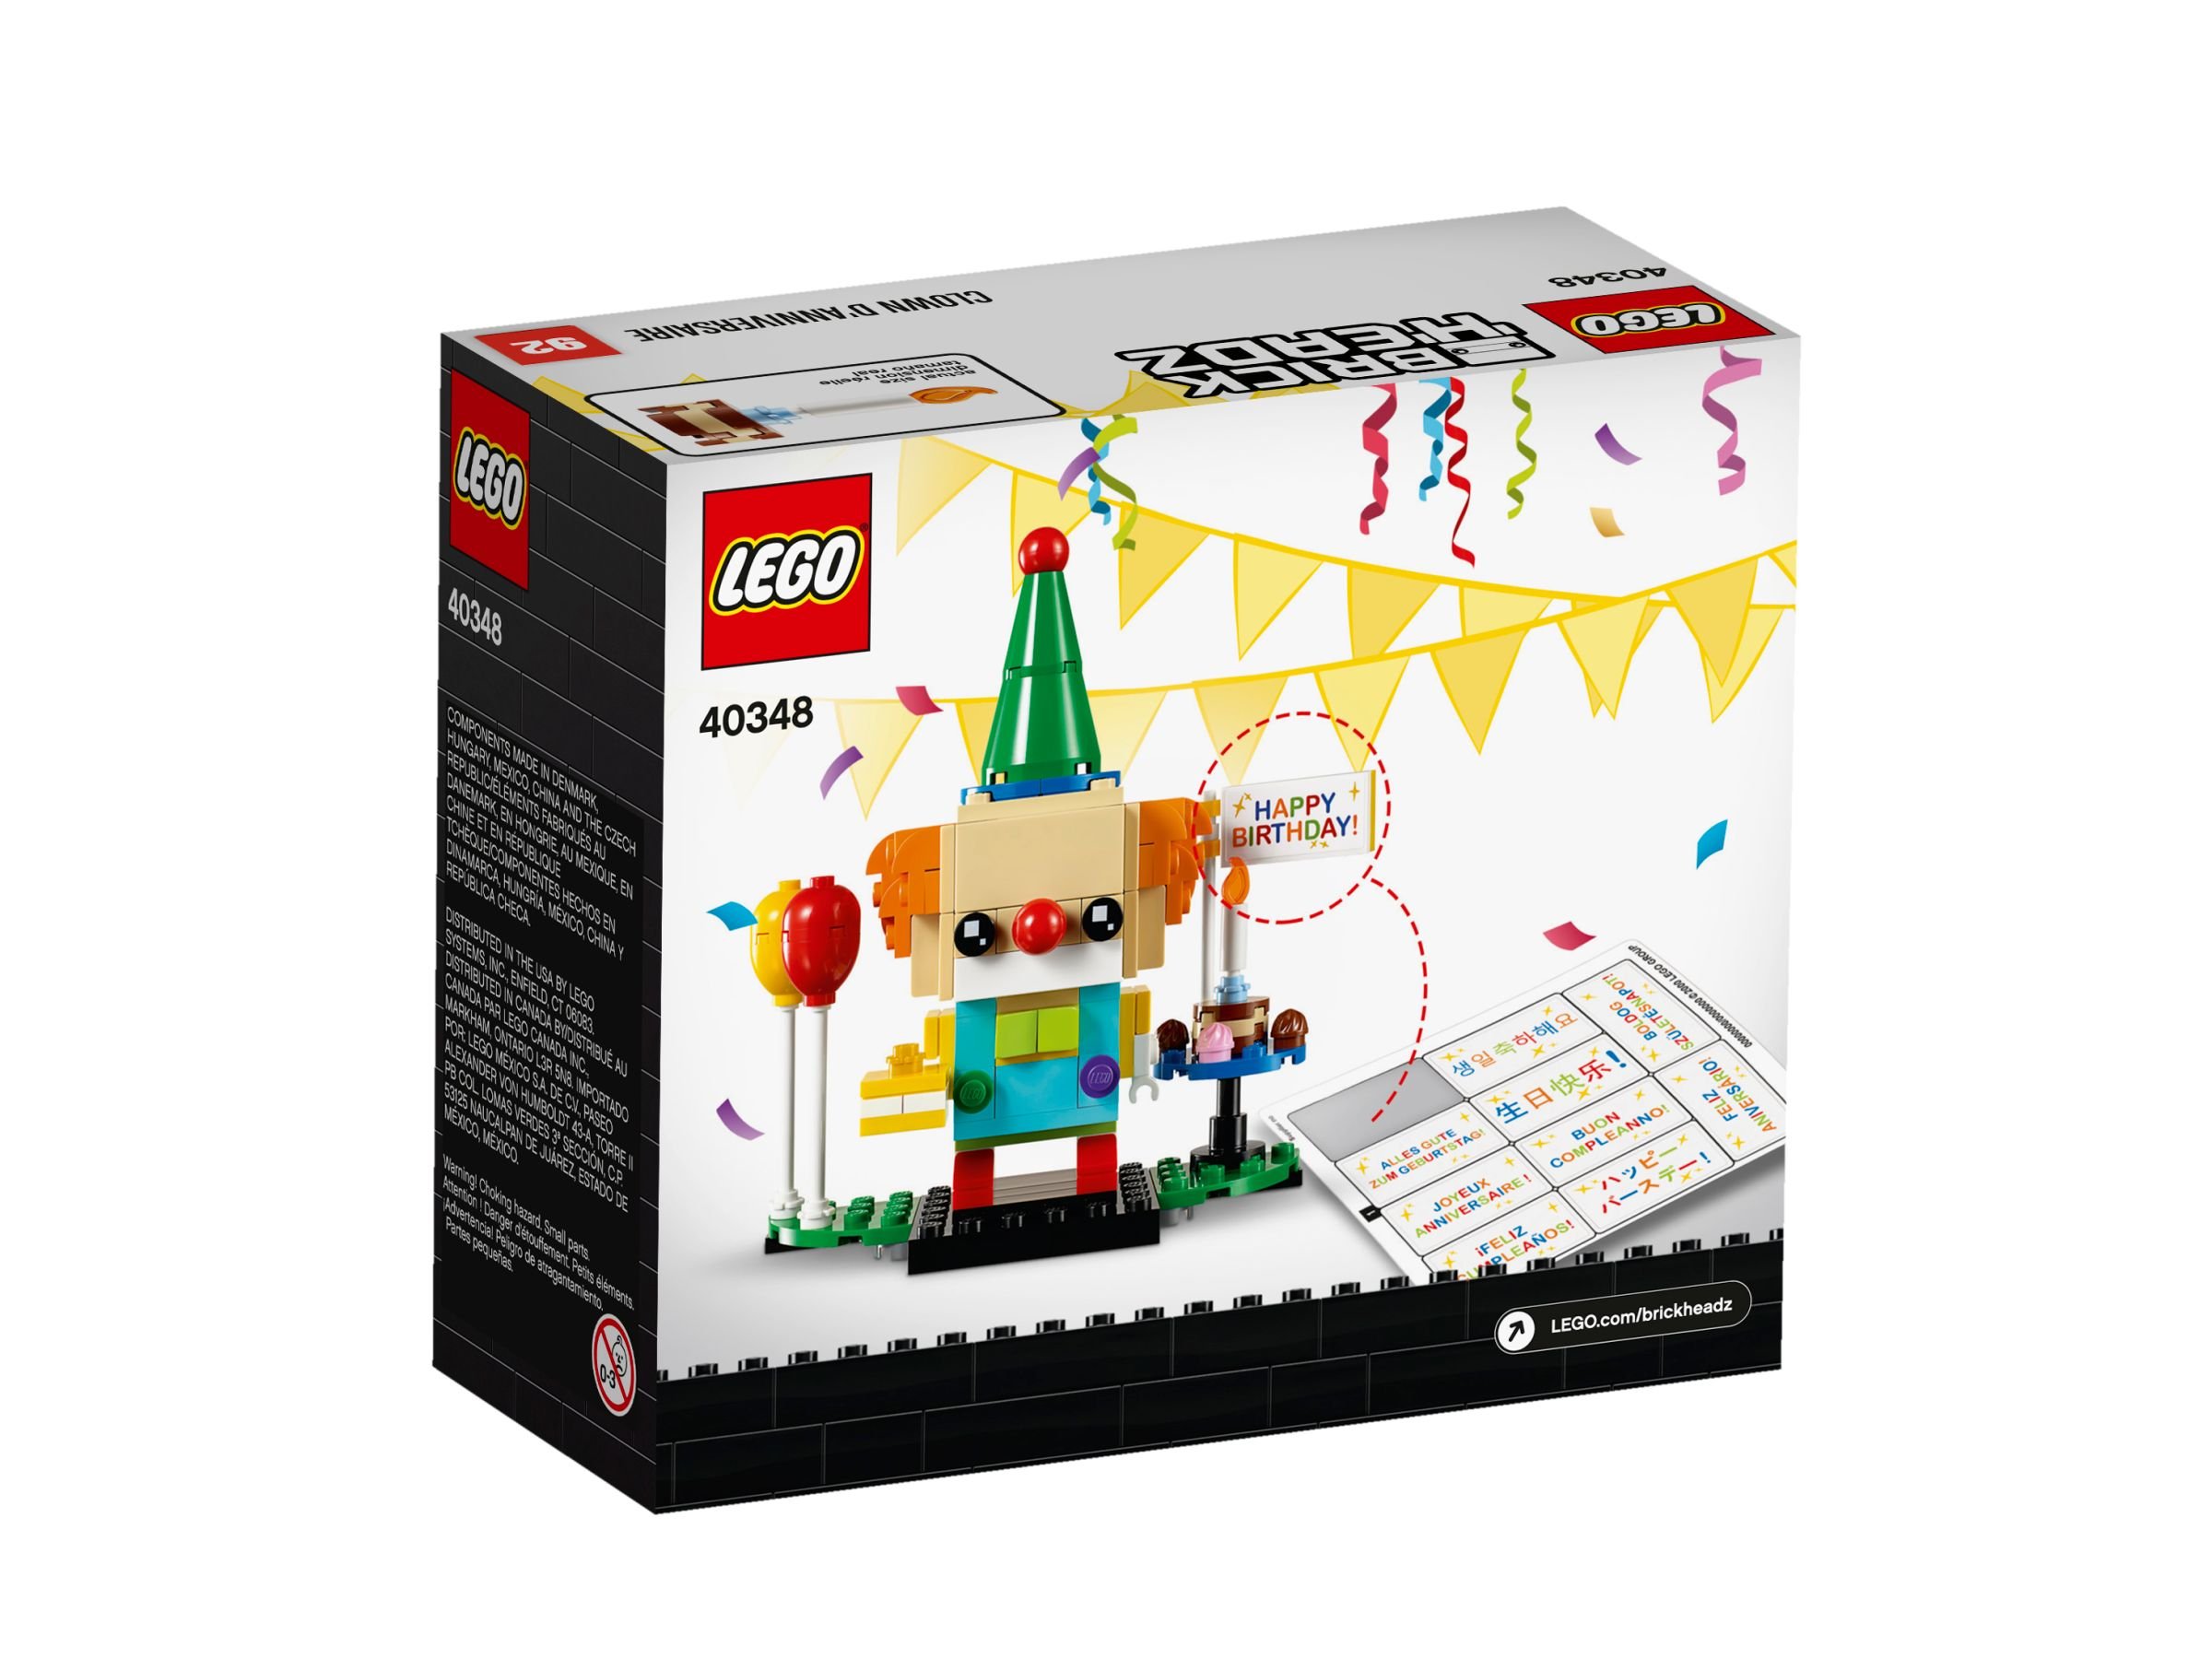 LEGO BrickHeadz 40348 Geburtstagsclown LEGO_40348_alt4.jpg